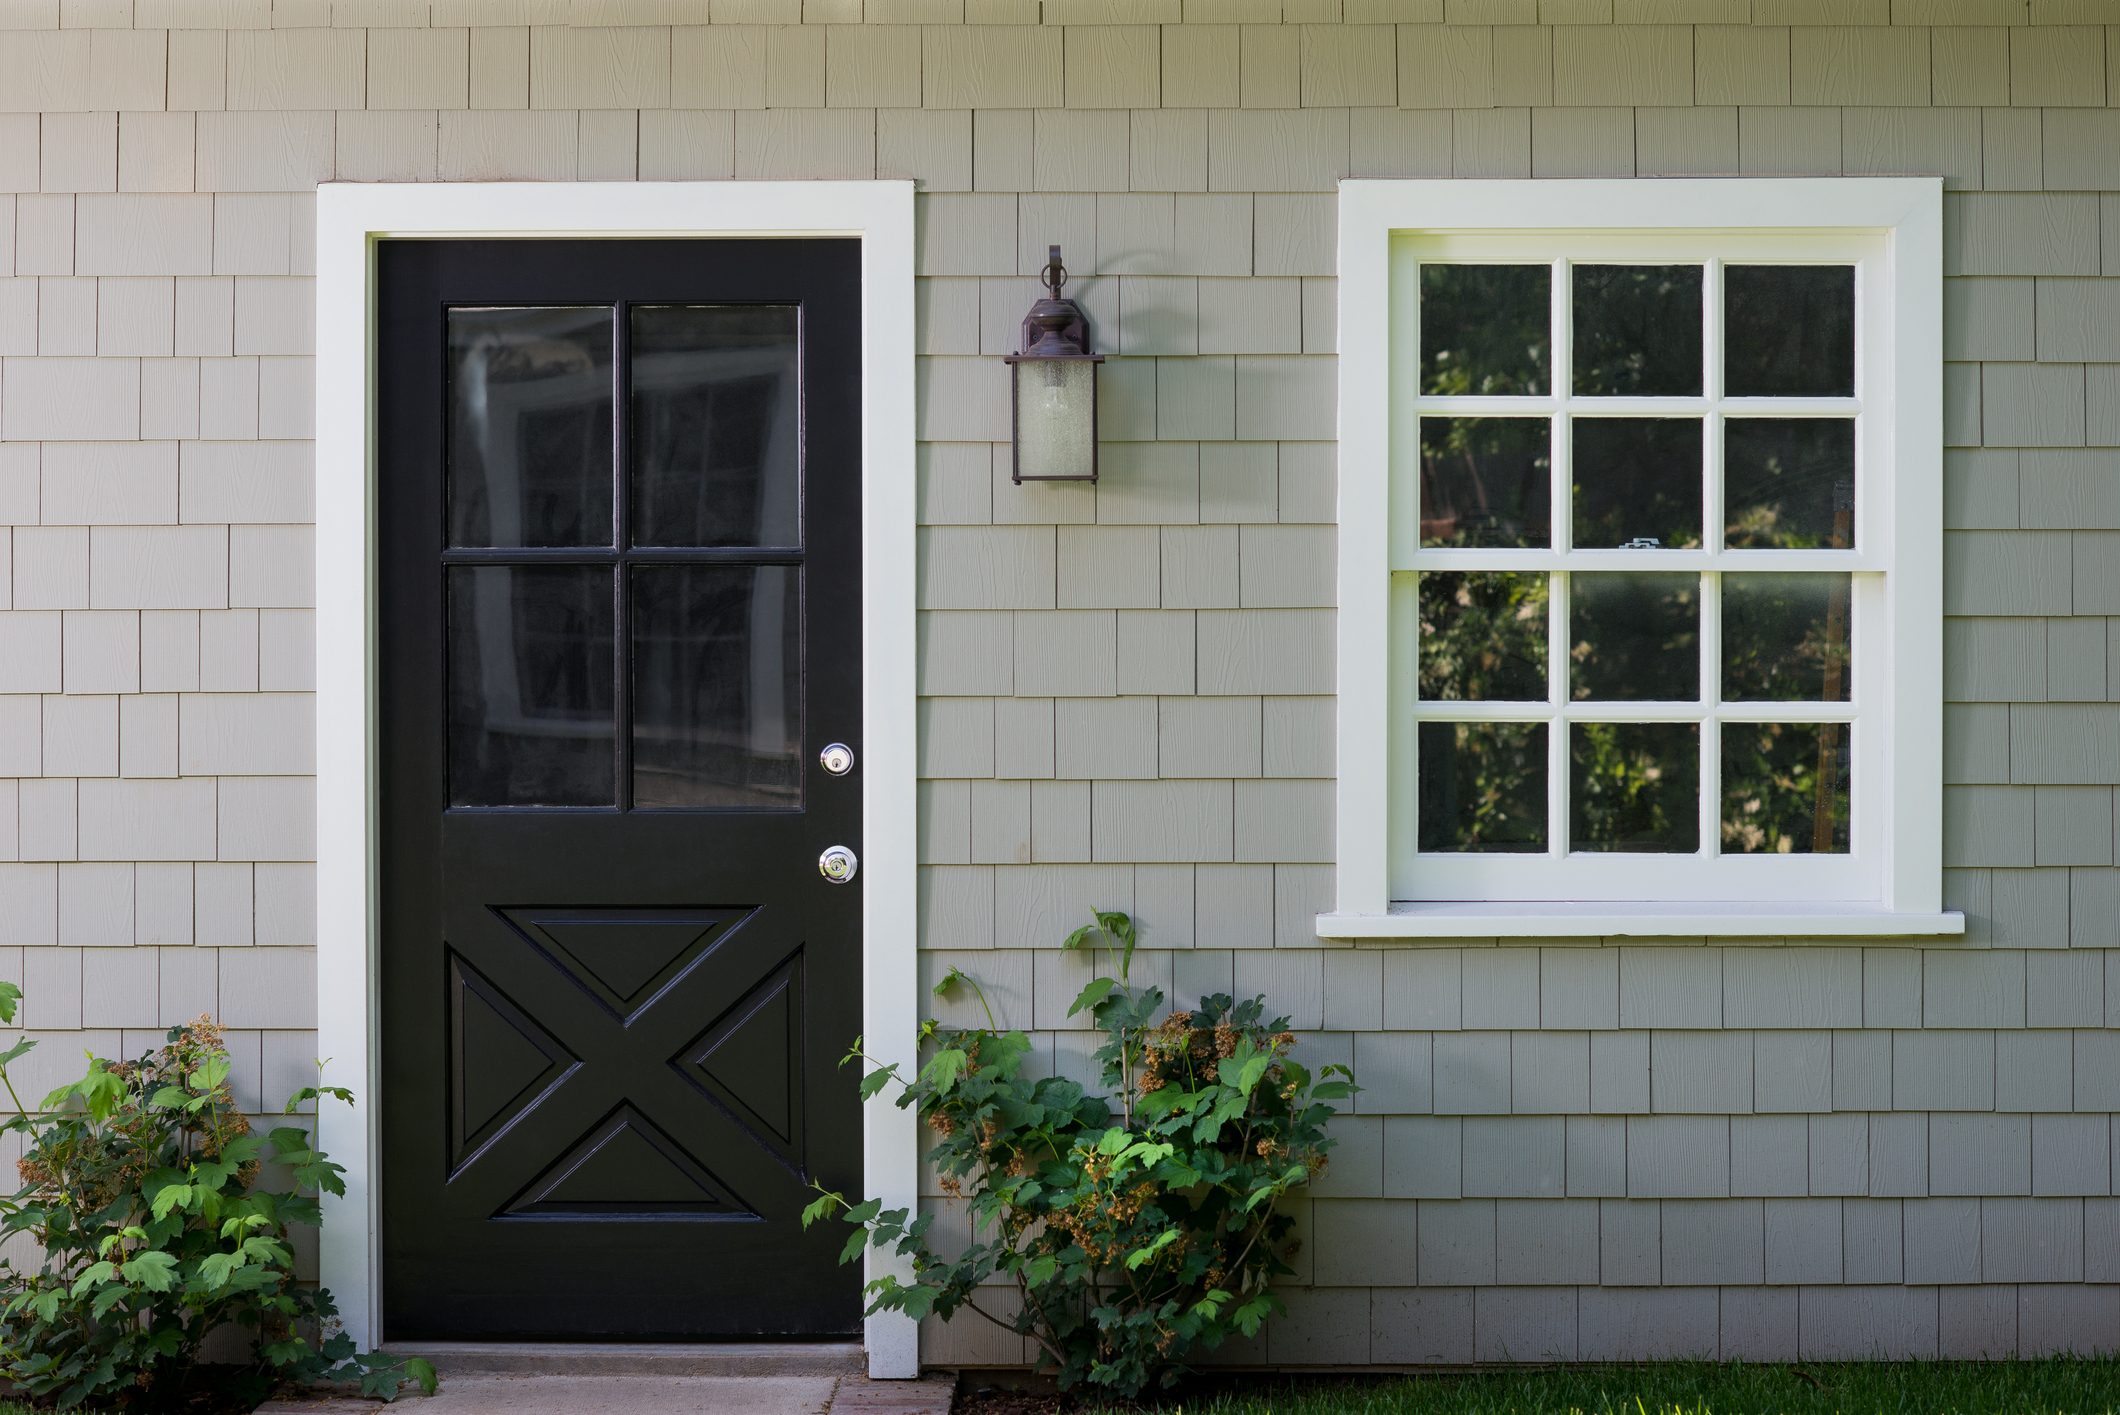 Energy efficient window and door of a house